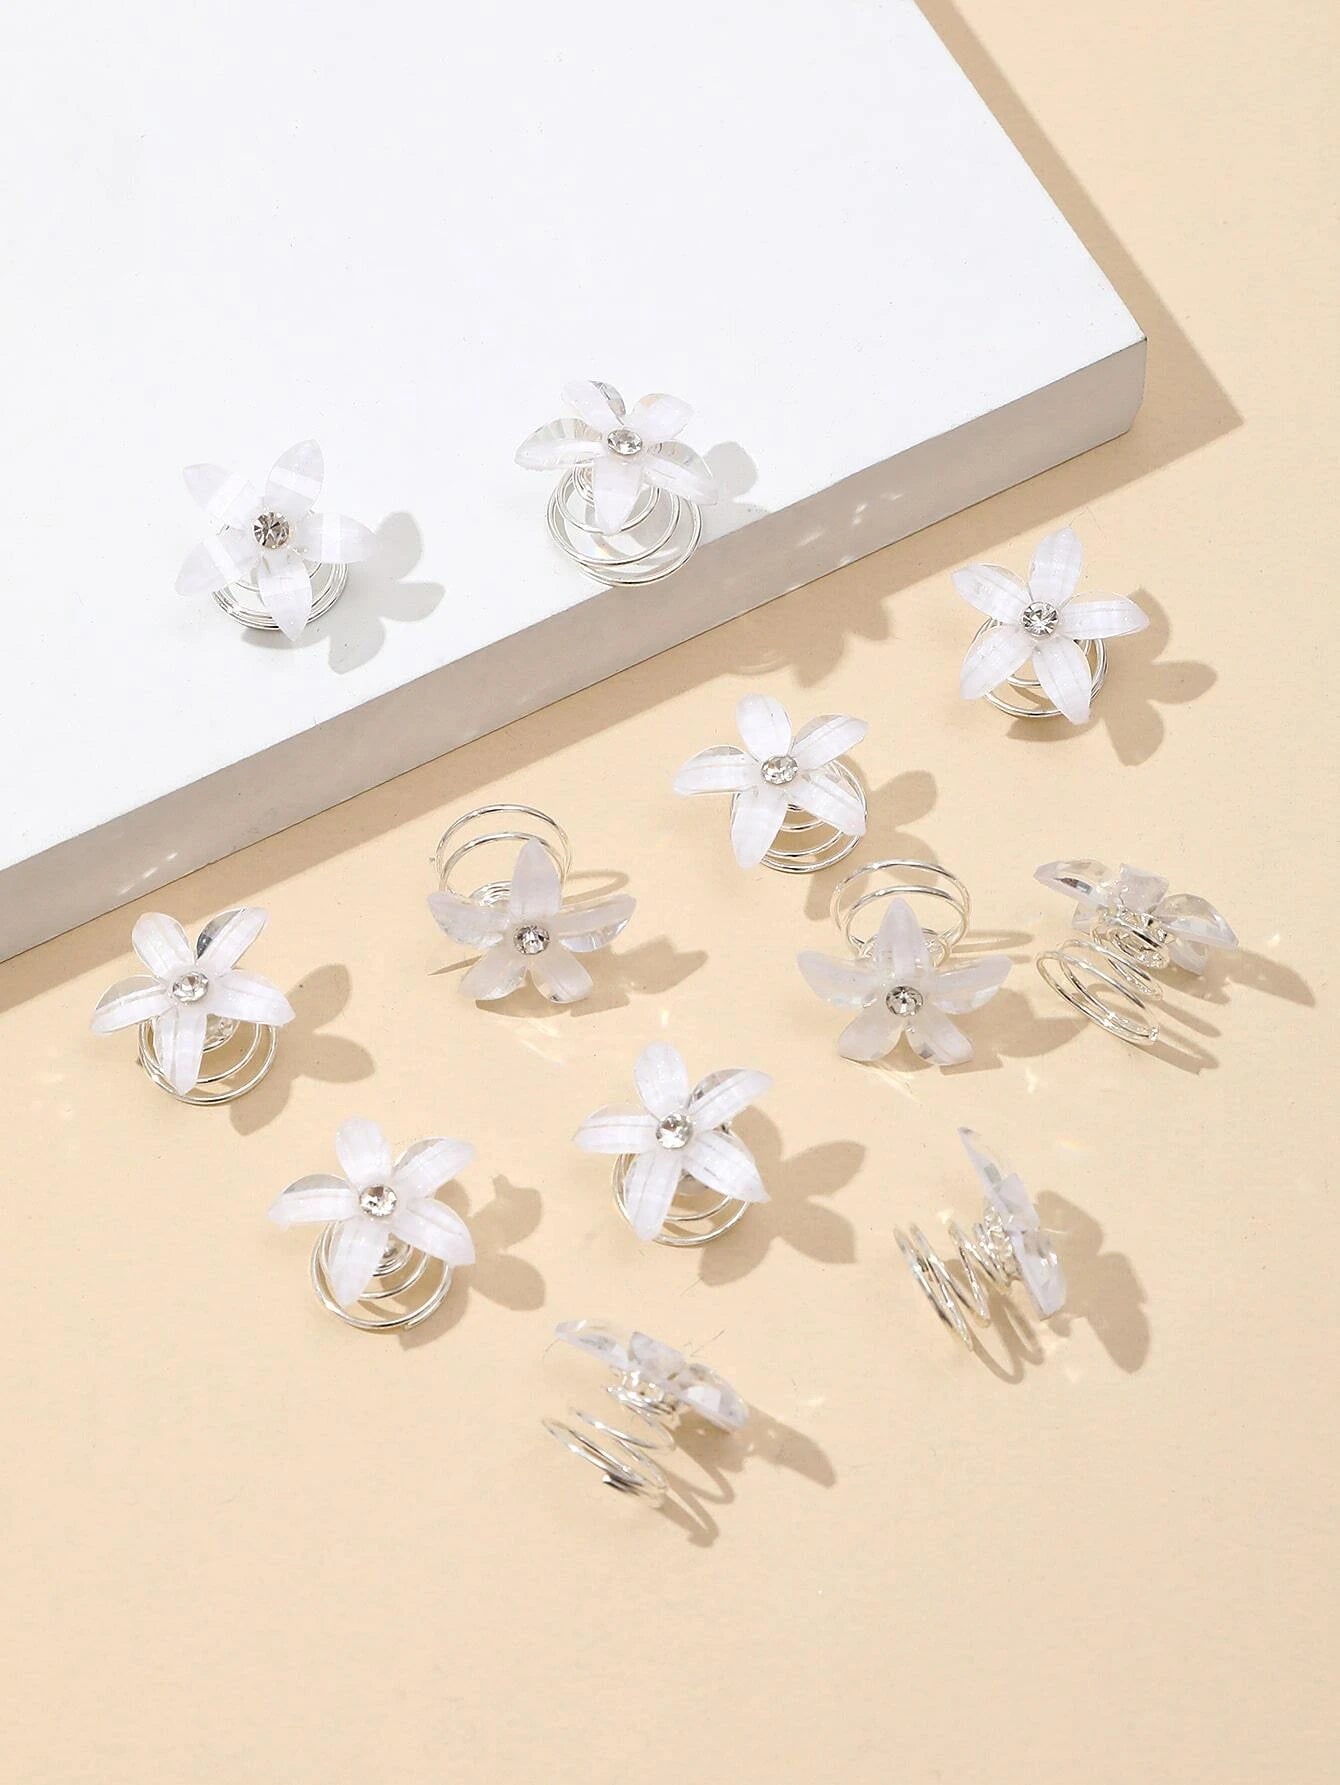 12 stk Hårspiraler med Hvide Blomster